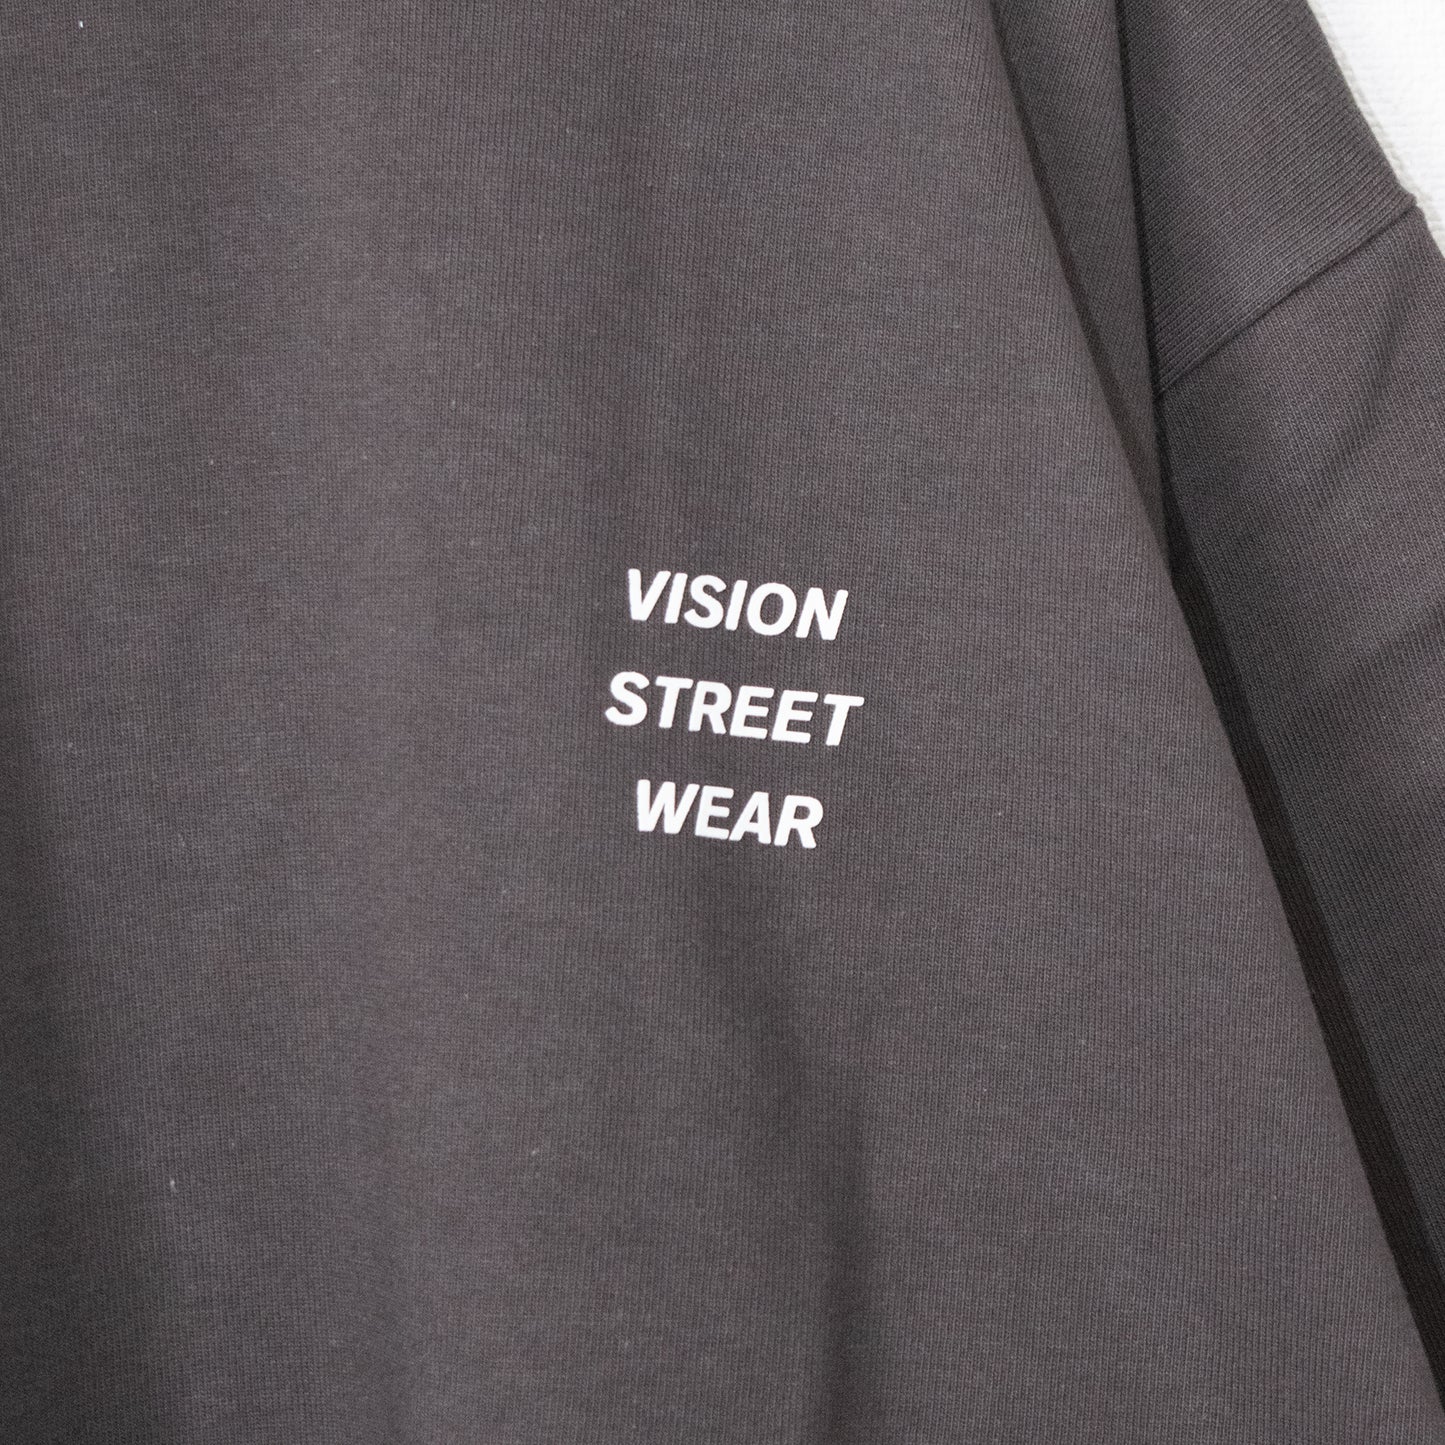 VISION STREET WEAR Retro Shop Illustration T-shirt